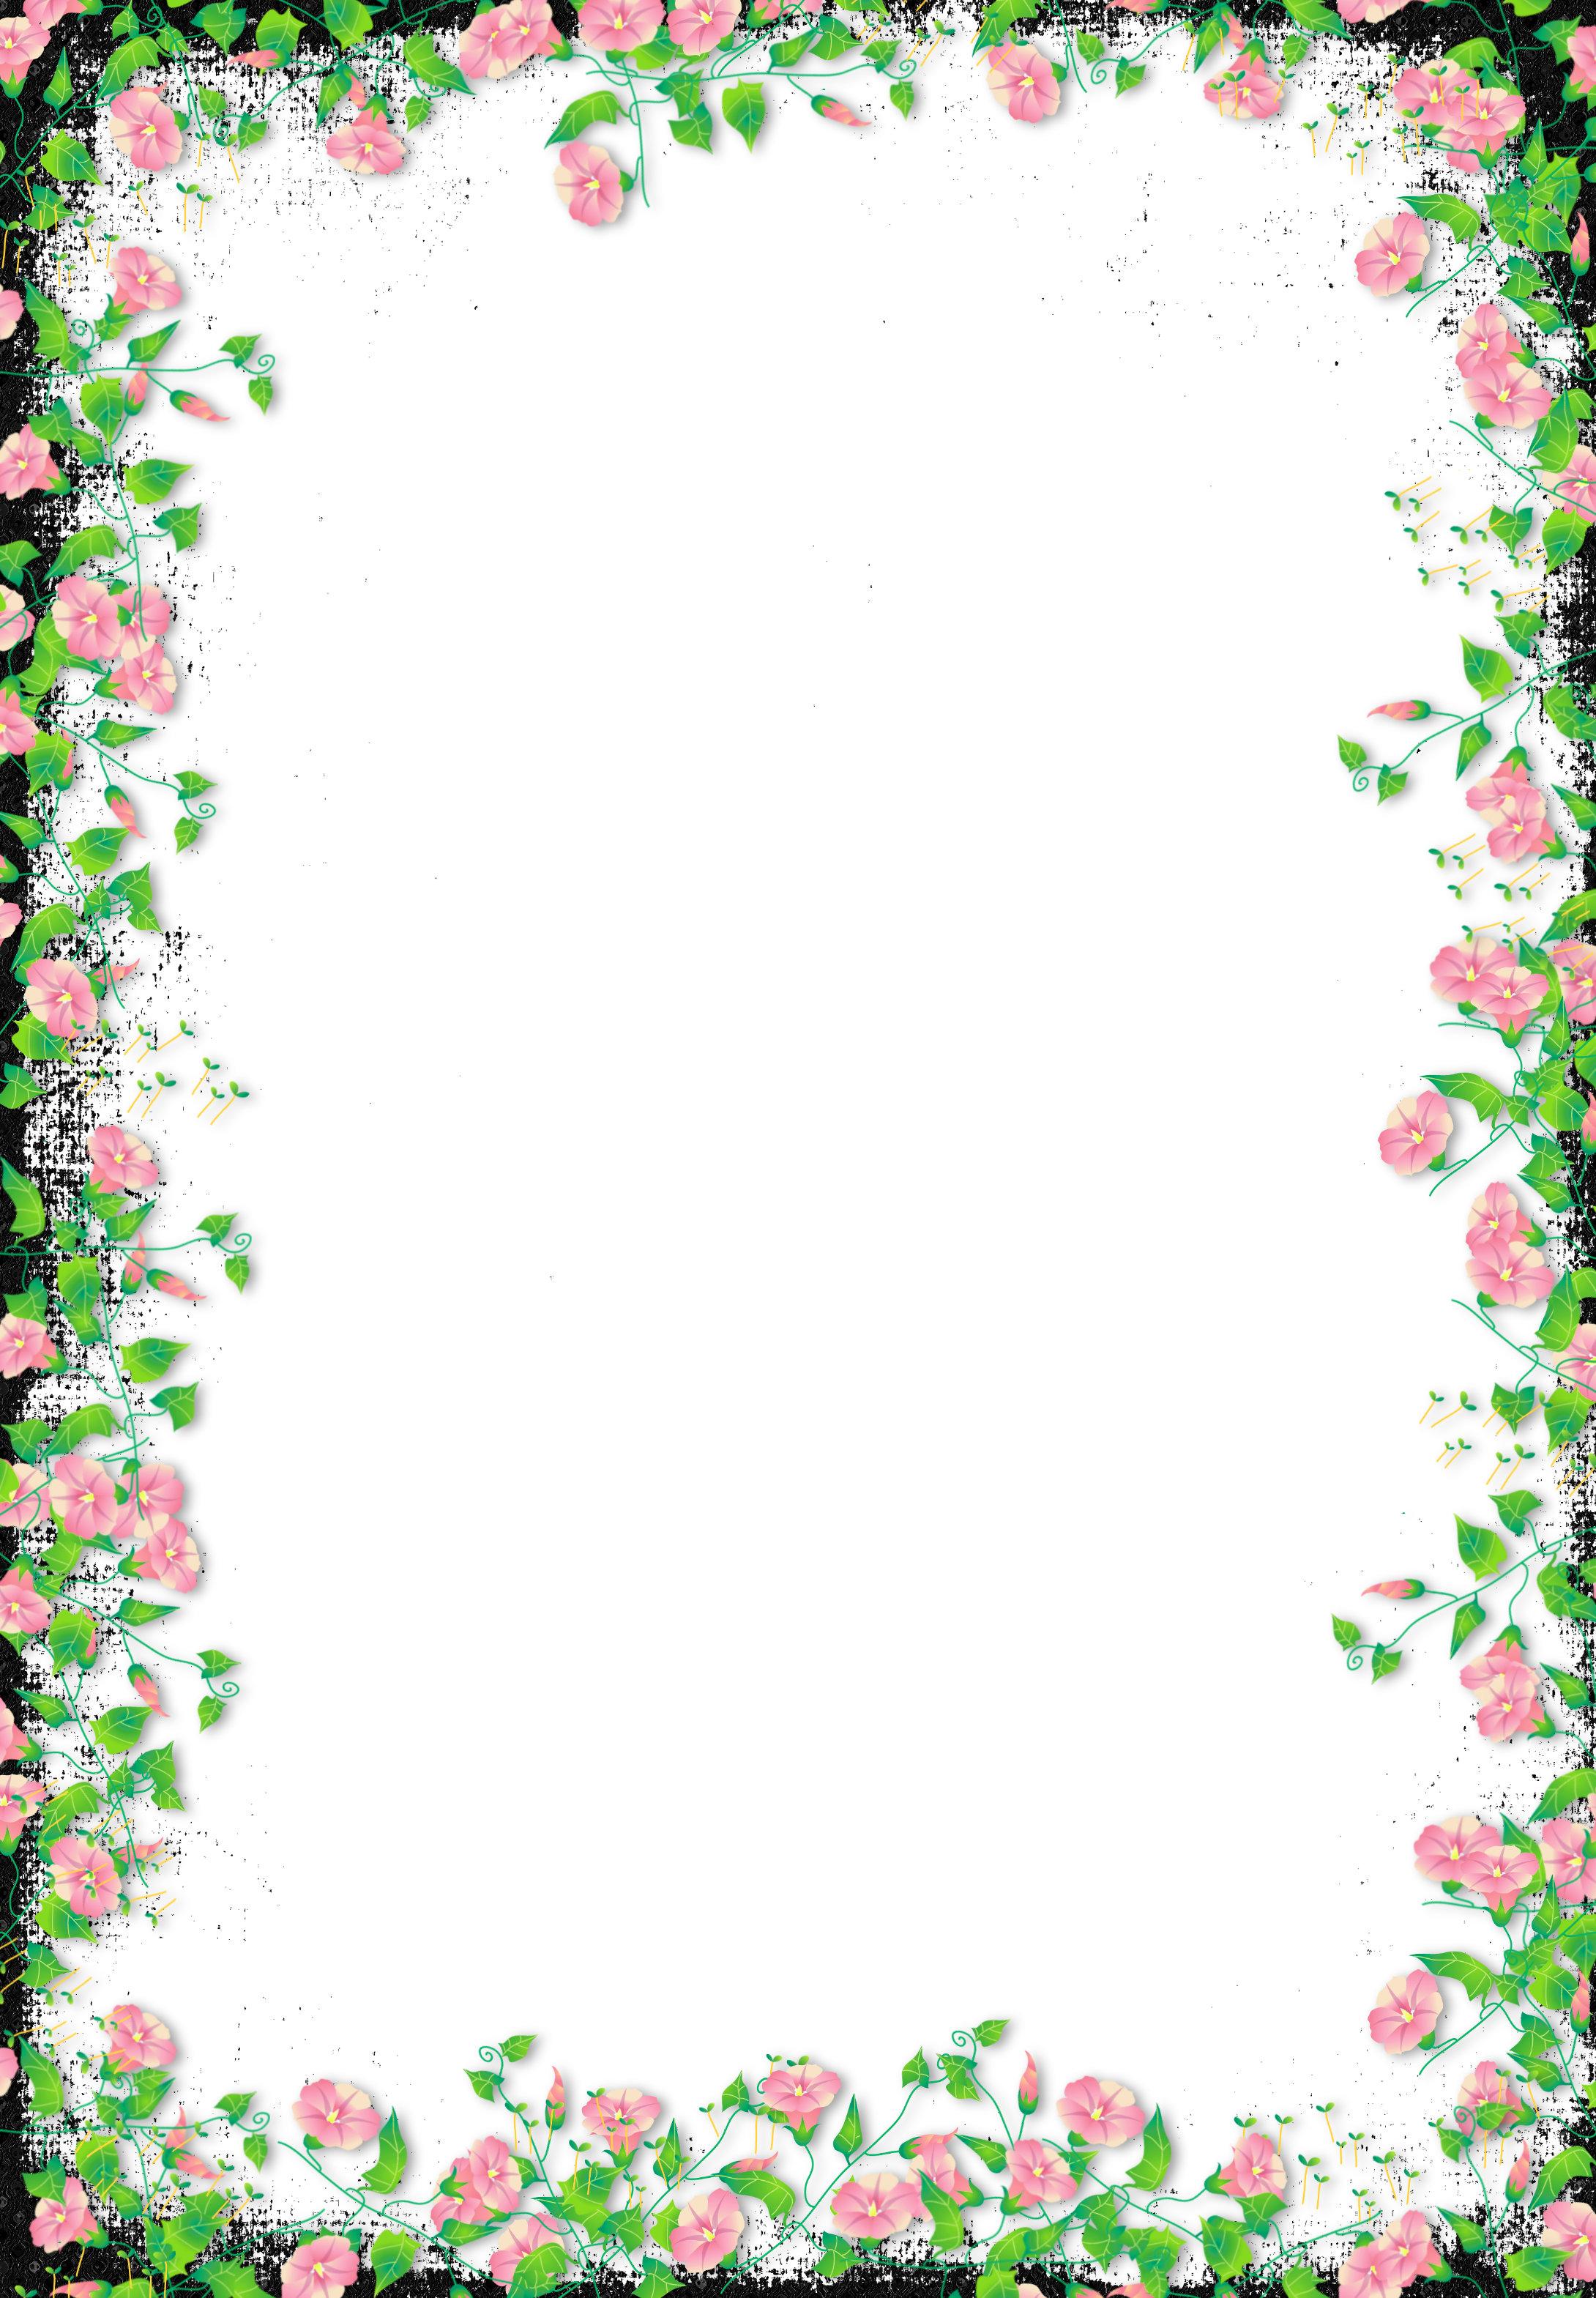 Flower Frame Border PNG HD Quality